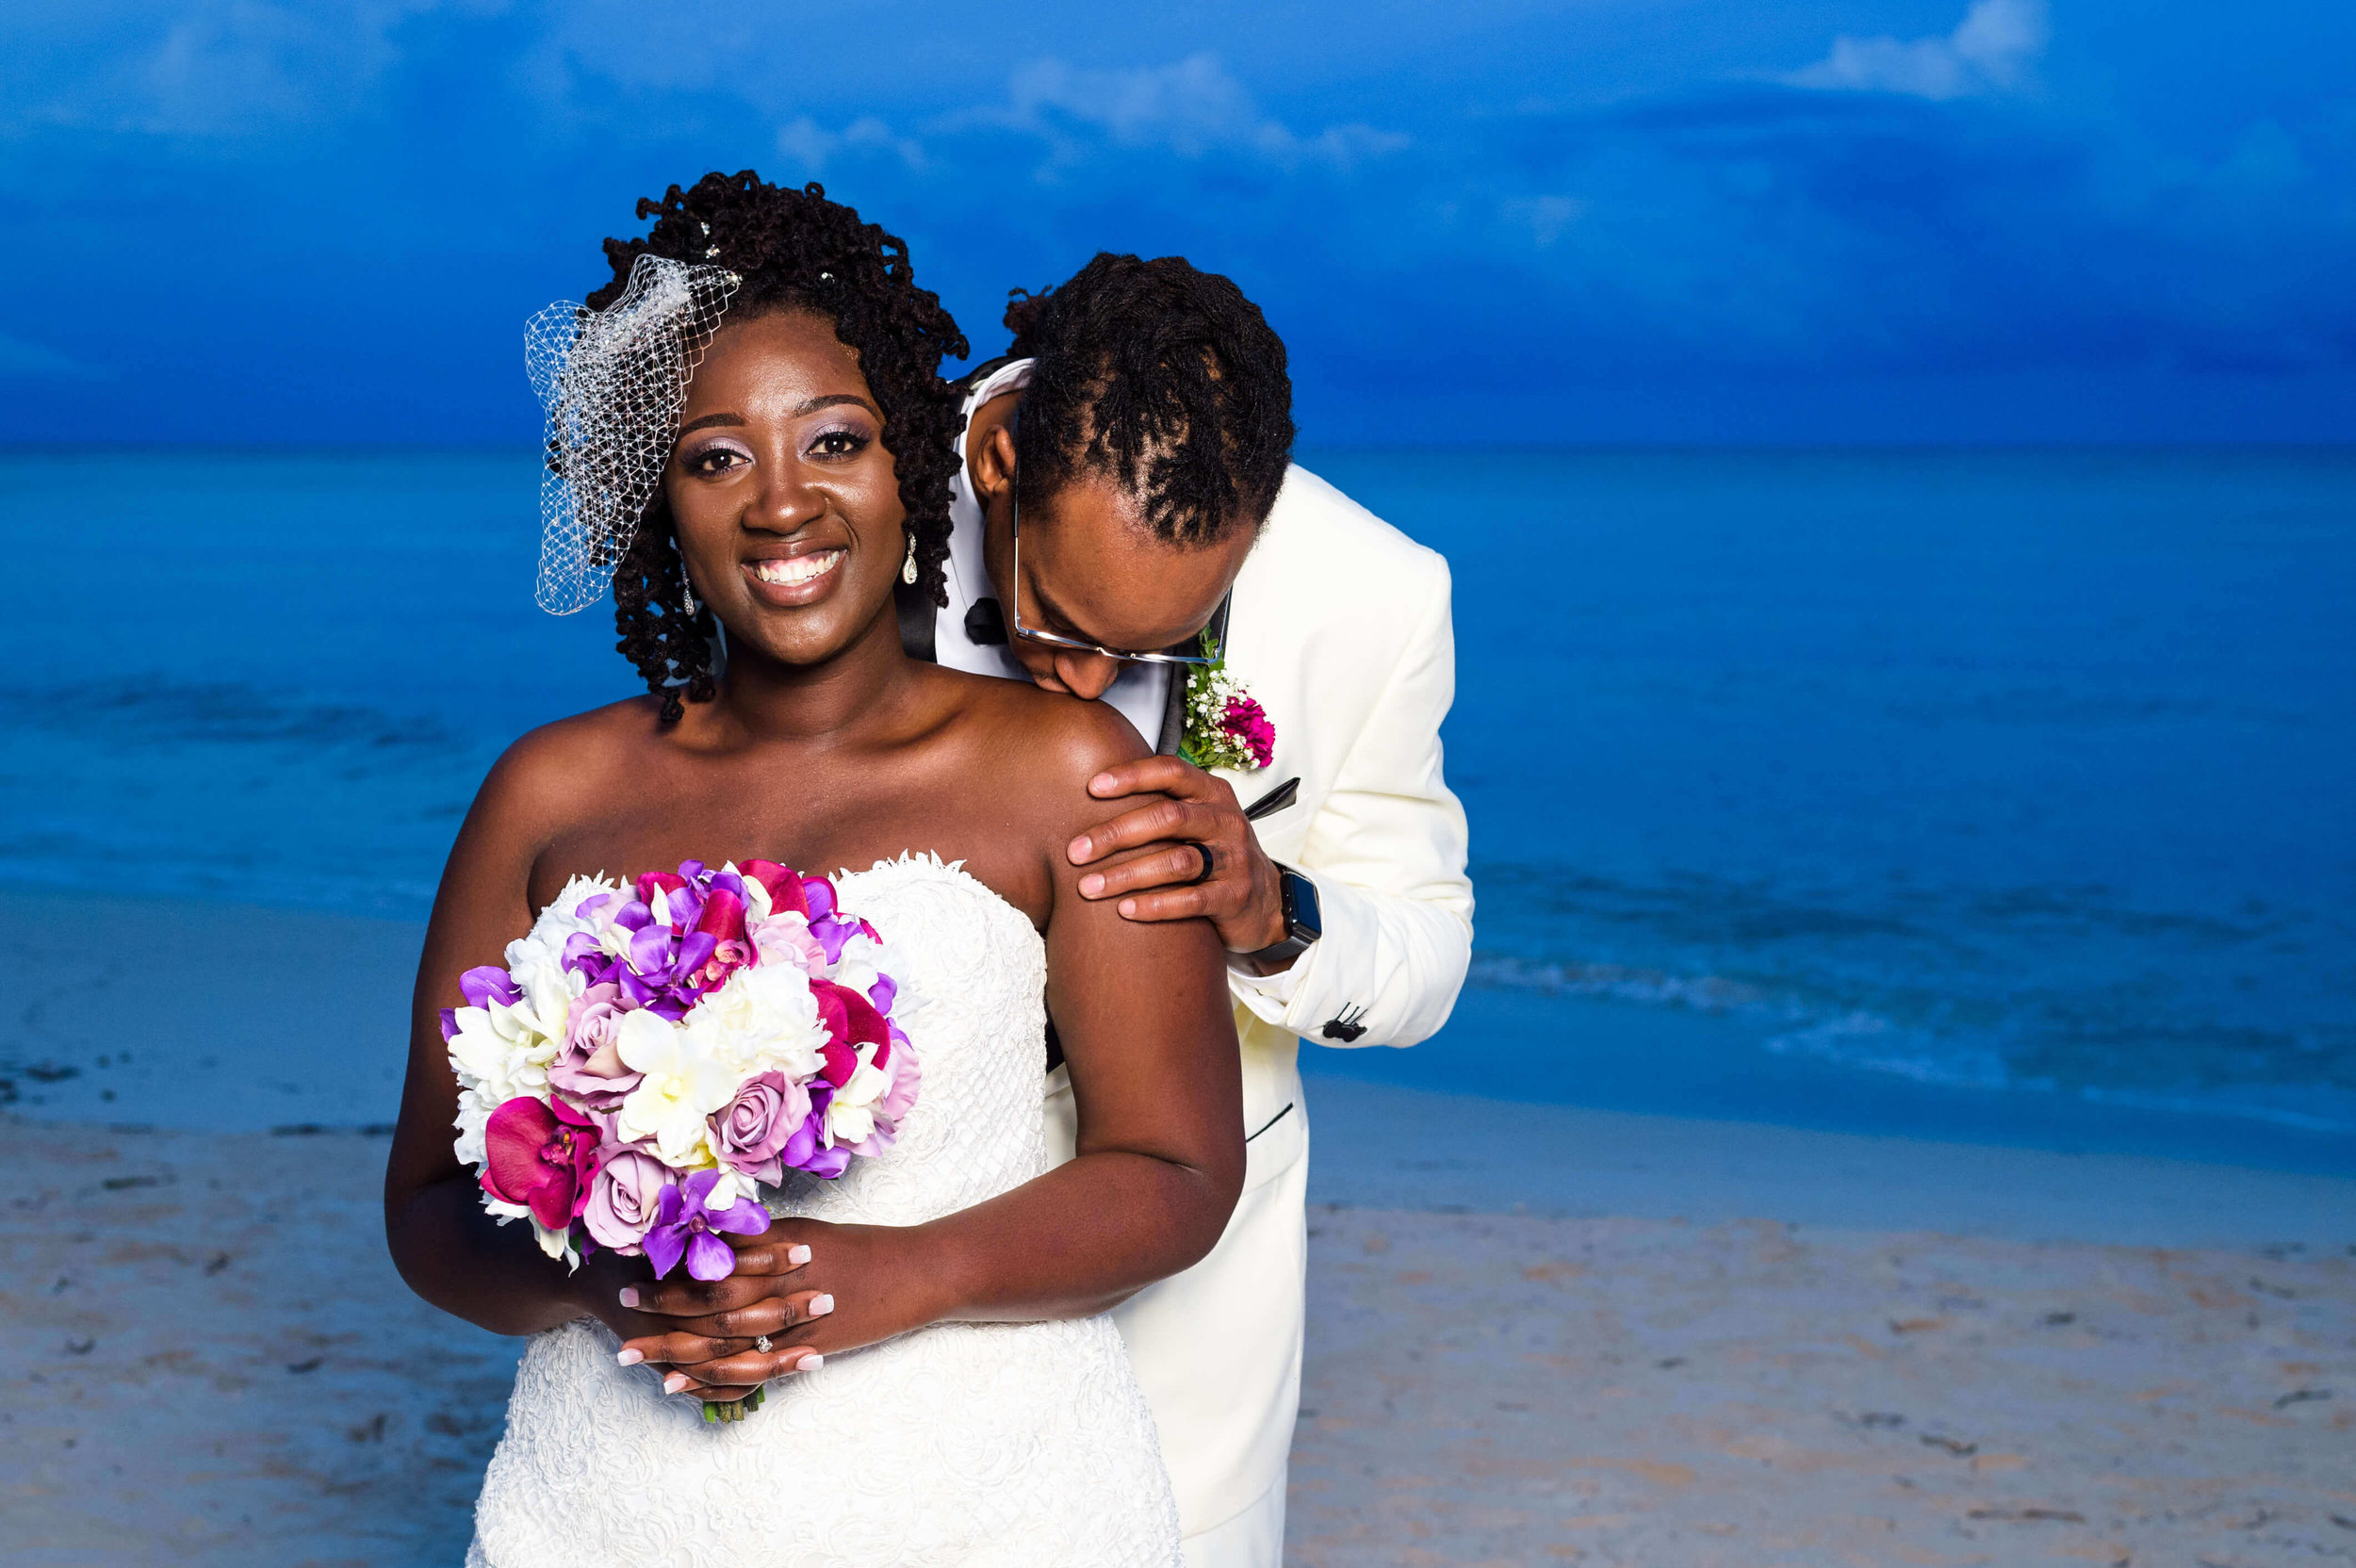 jamellah-how-to-plan-a-destination-wedding-in-montego-bay-jamaica-royalton-blue-waters-black-destination-bride-destiland-desti-guide-to-destination-weddings-couple-beach-after-ceremony.jpg